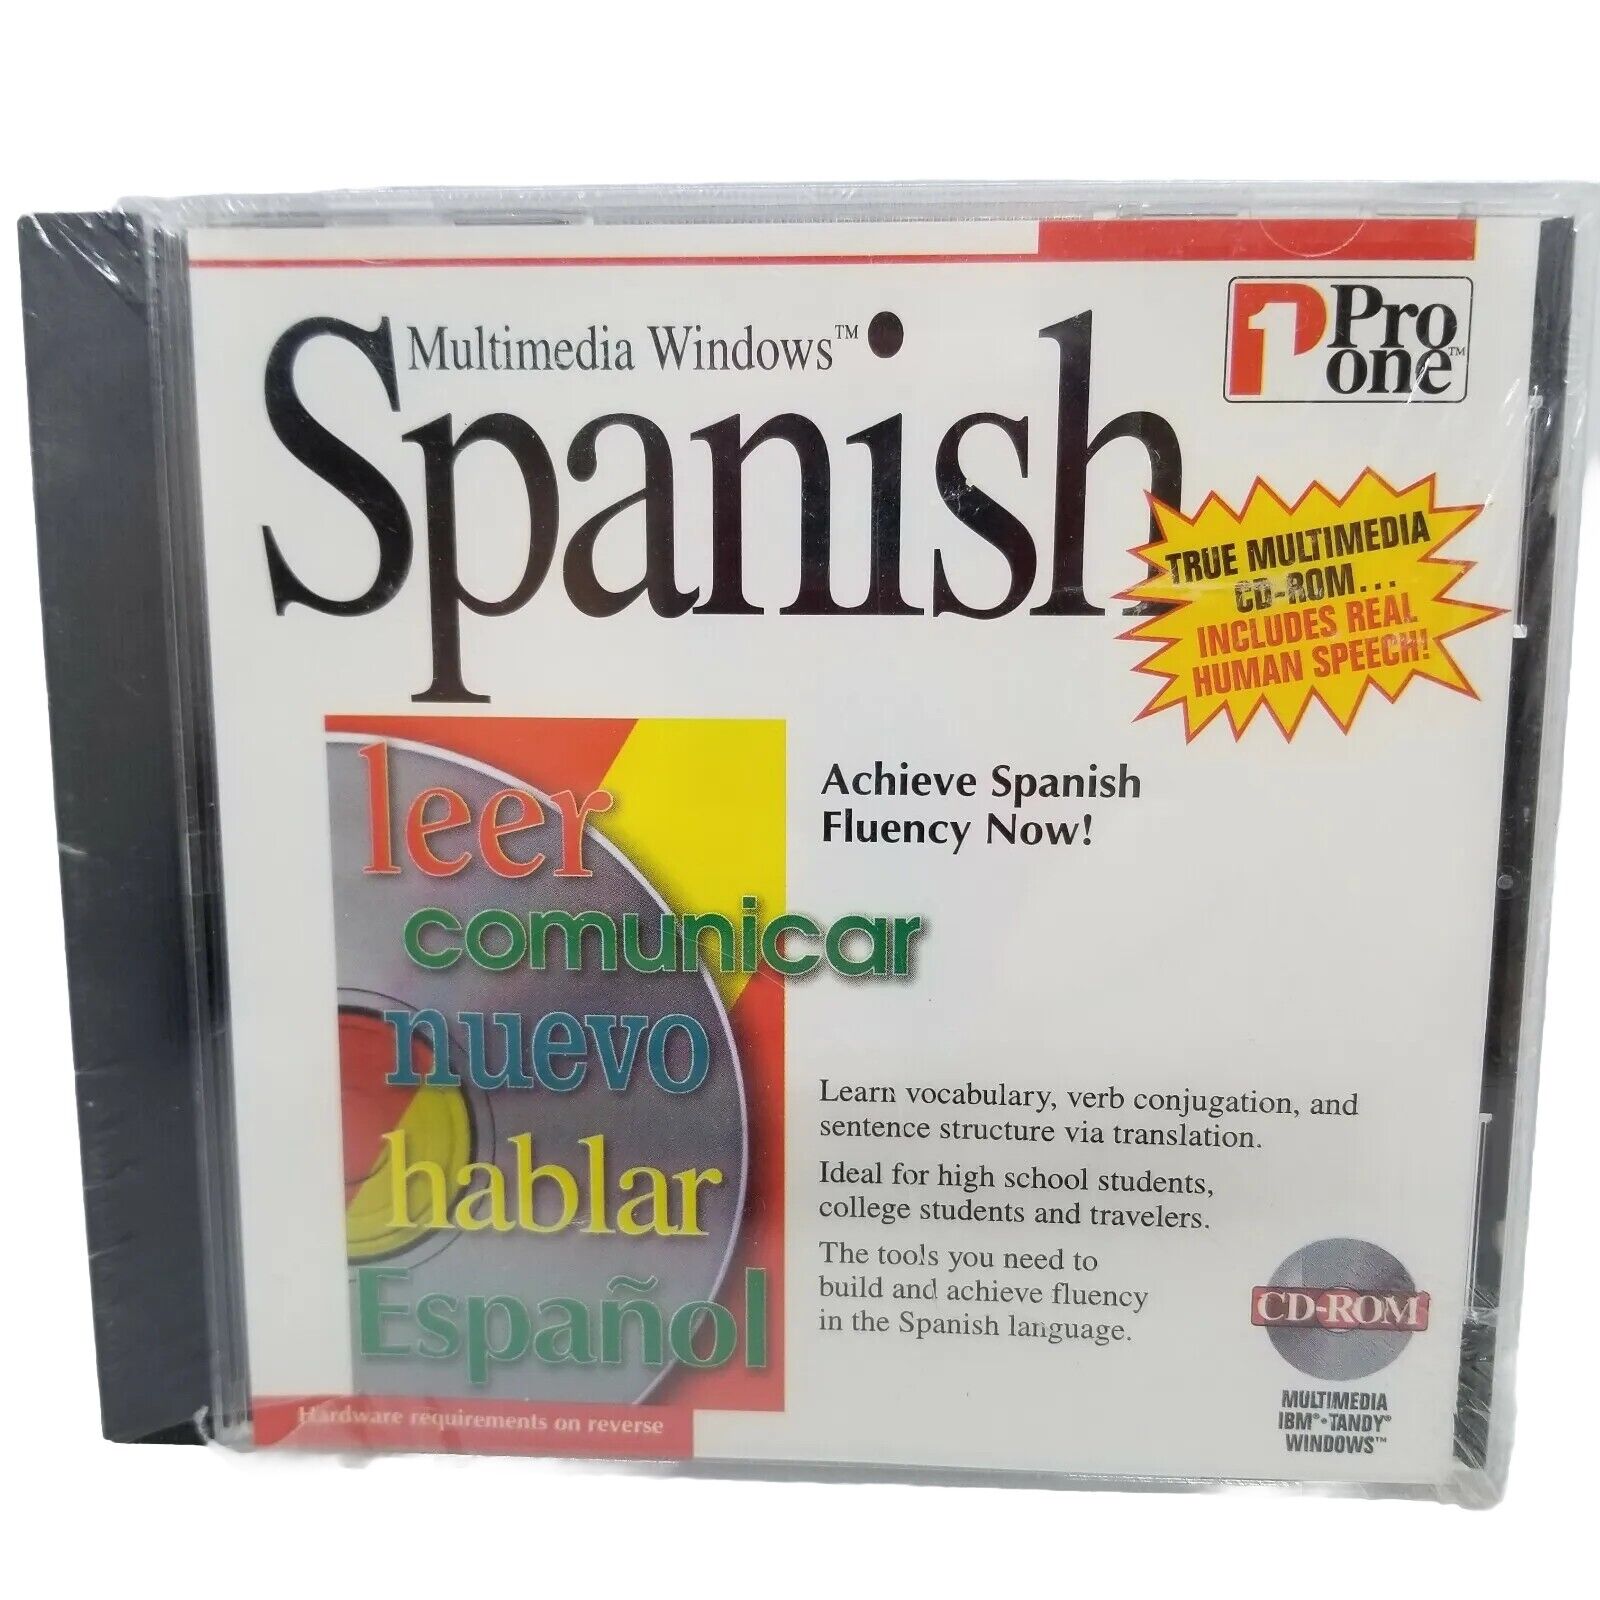 Multimedia Windows Spanish Pro One CD-ROM (PC, 1994) IBM Windows 95 3.1 Sealed